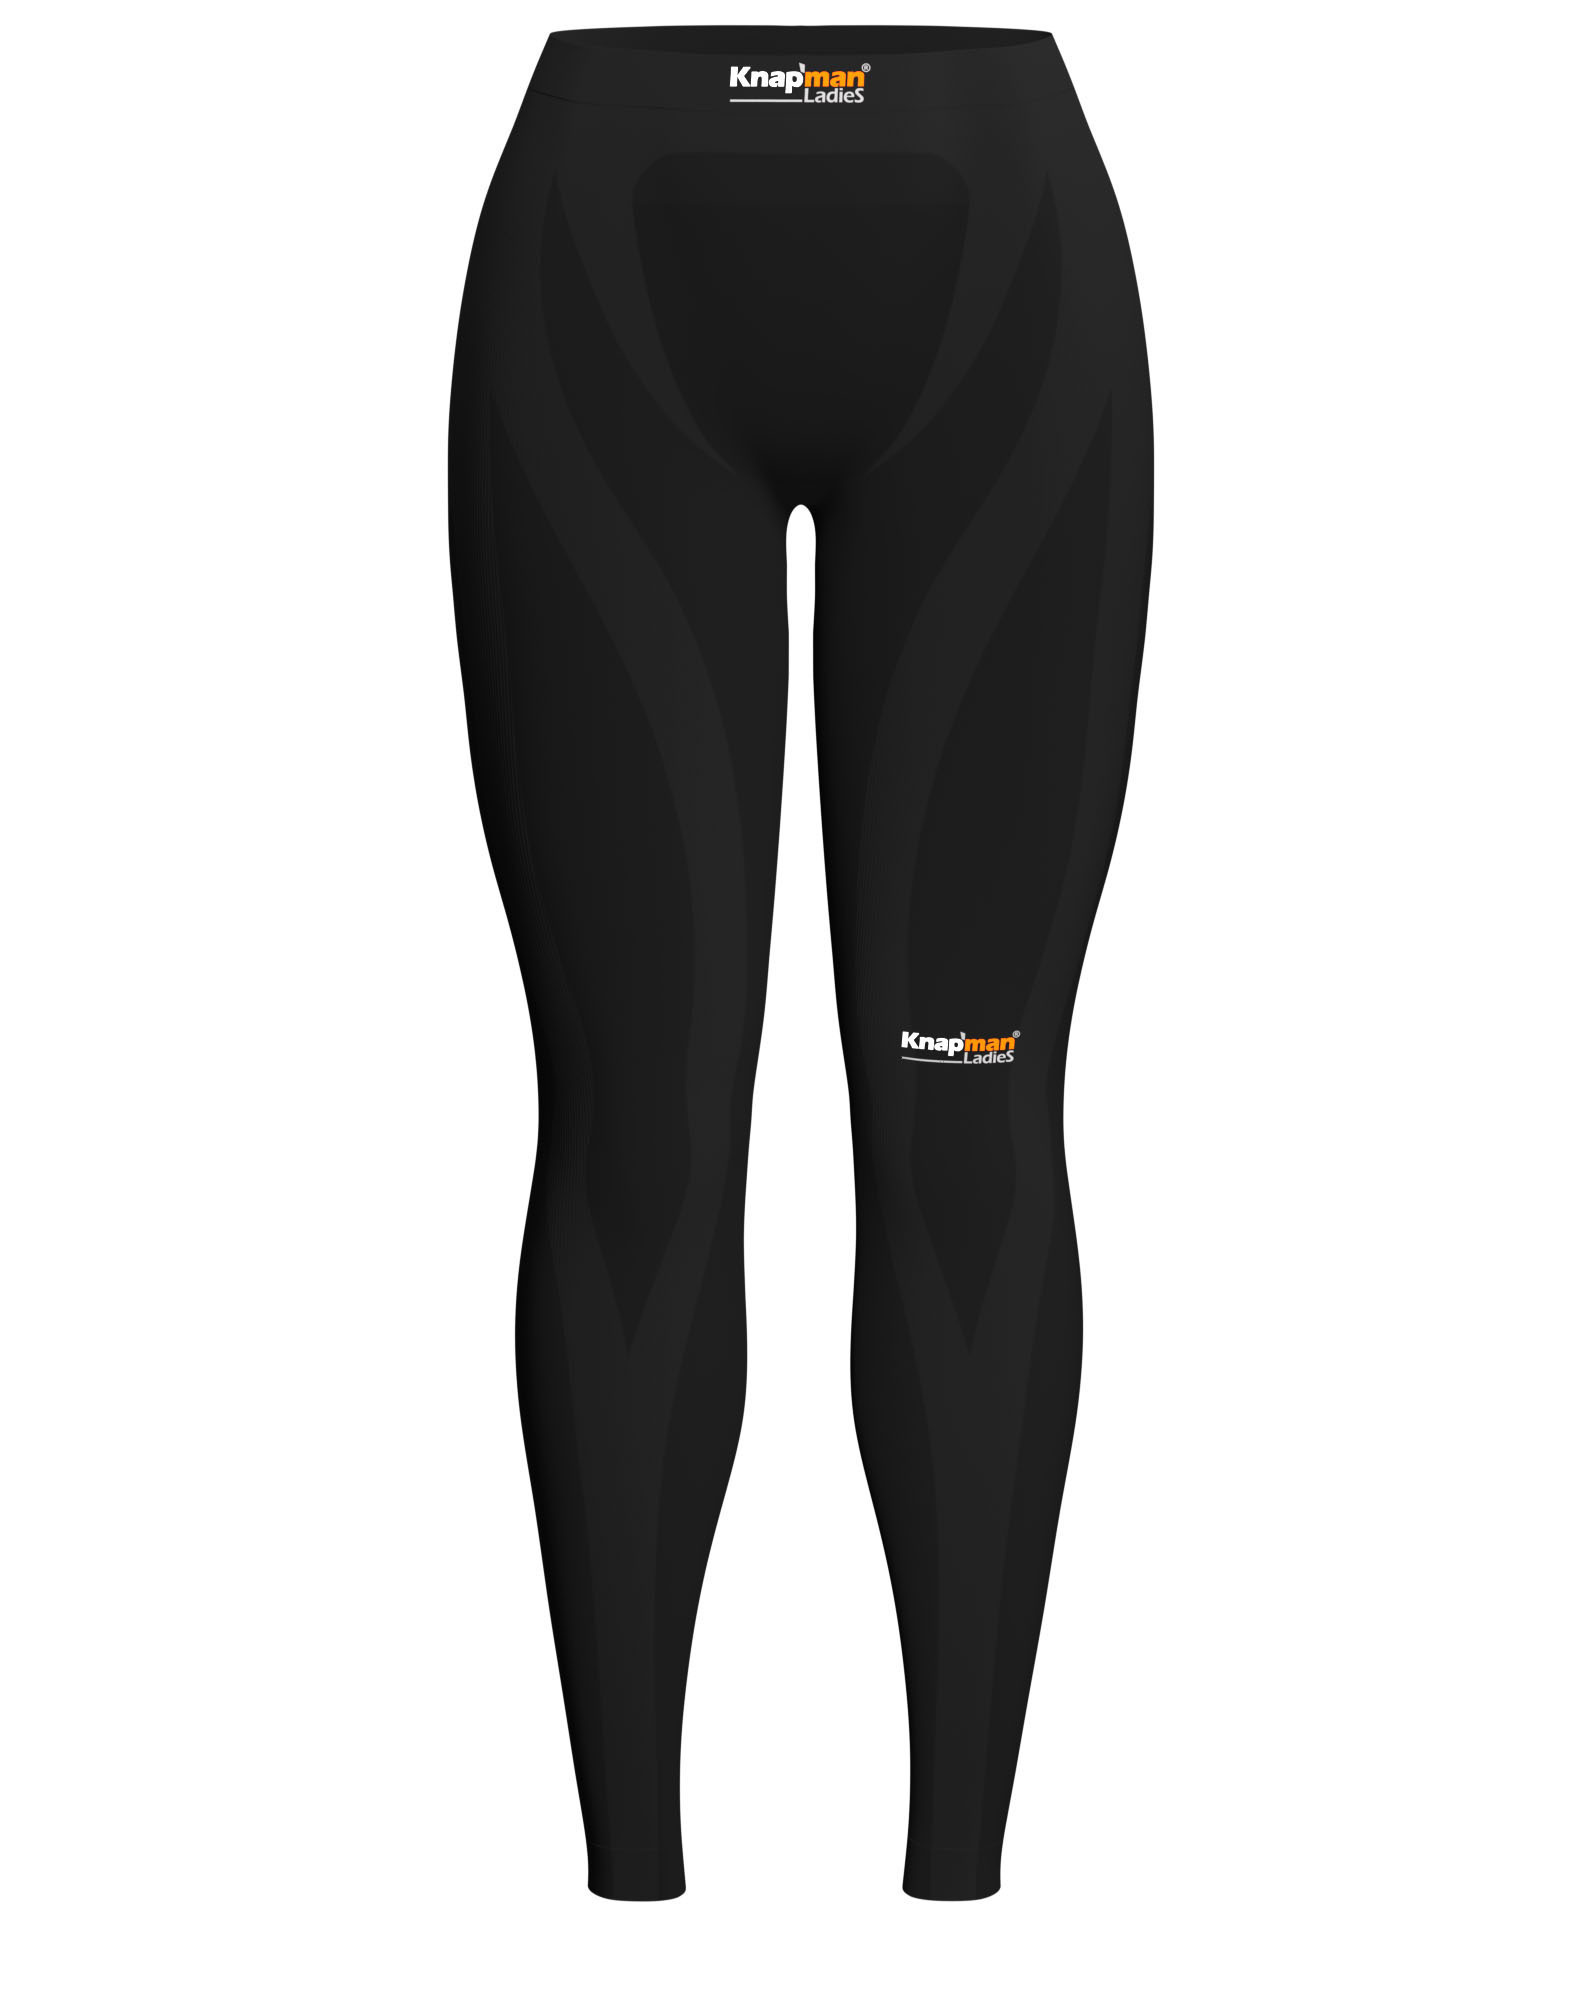 https://www.knapman.co.uk/product/123-large--knapman-ladies-zoned-compression-tights-45.jpg